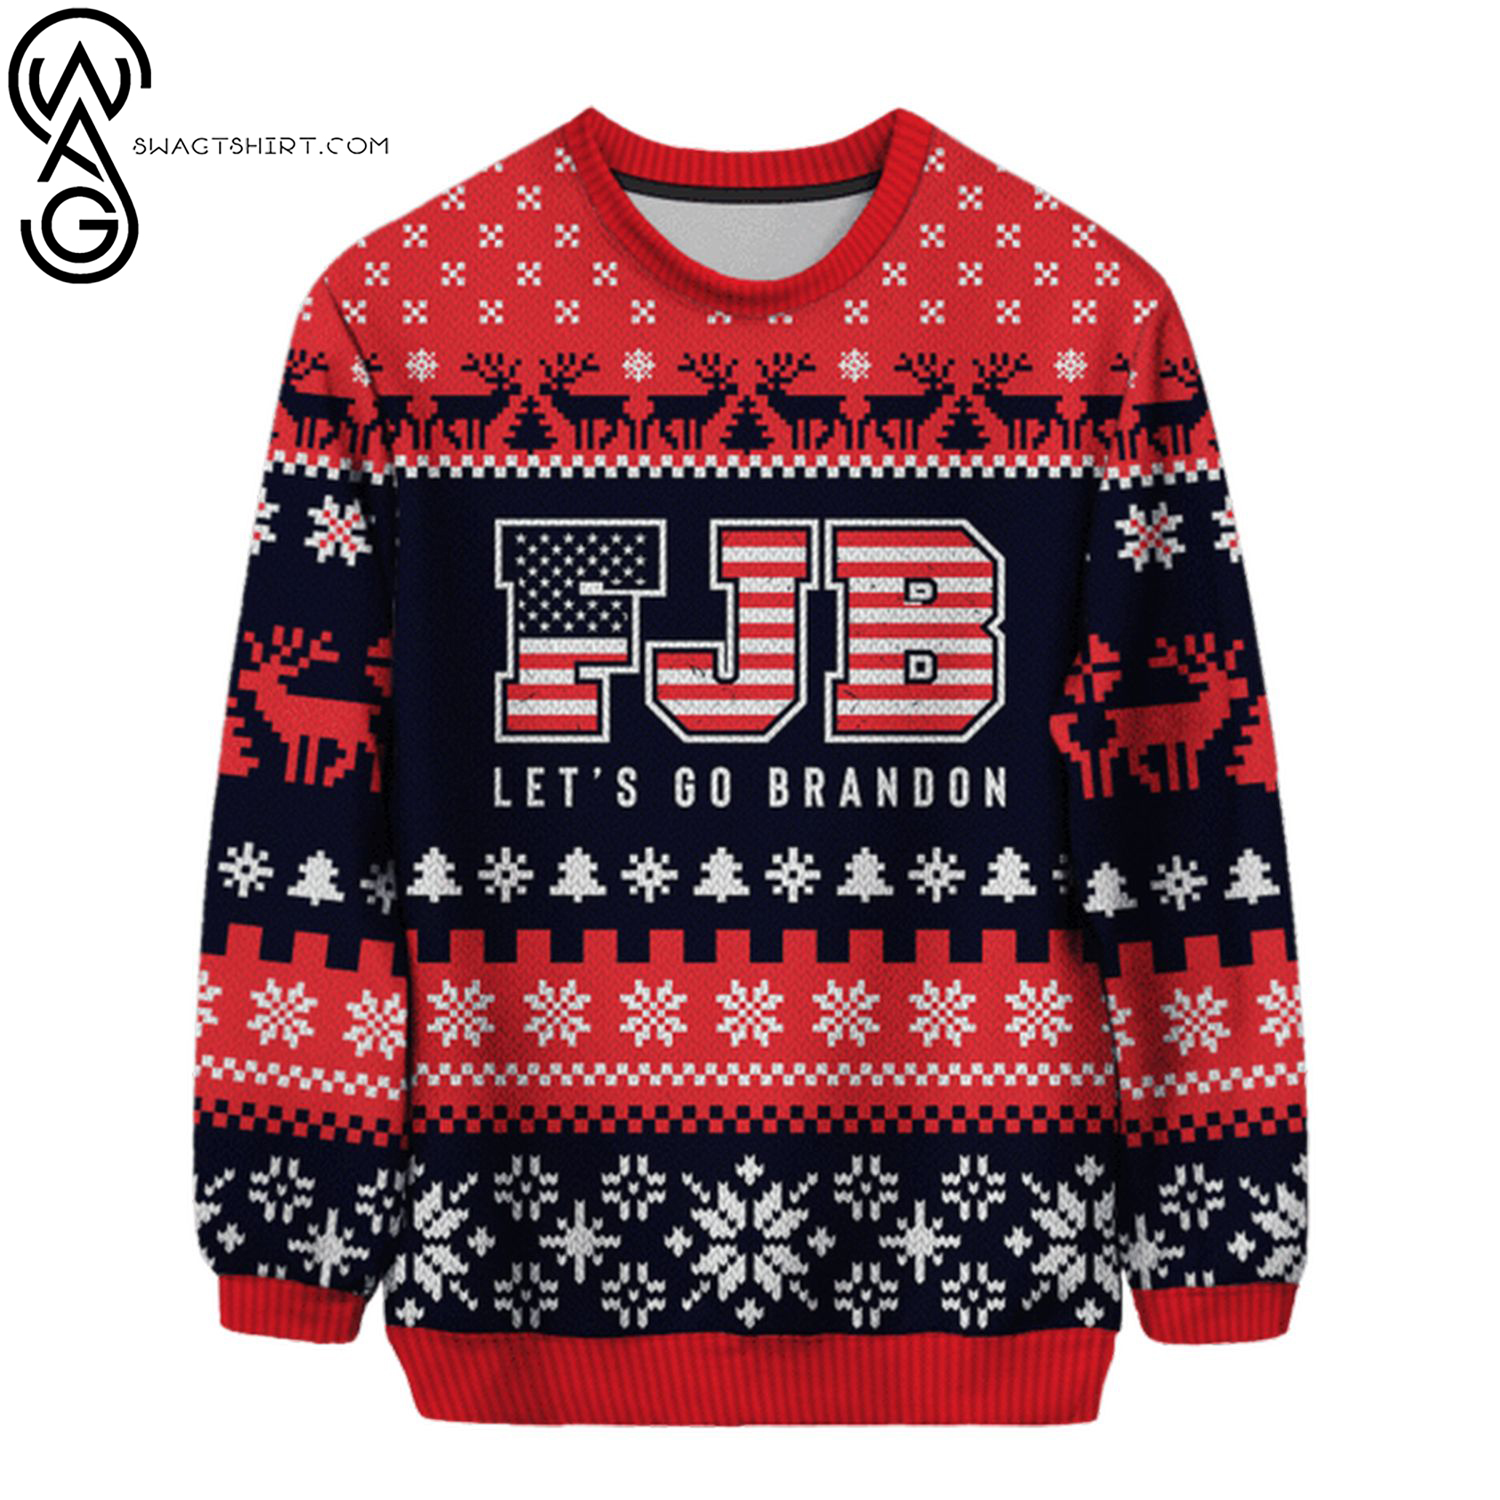 Fjb let's go brandon full printing ugly christmas sweater